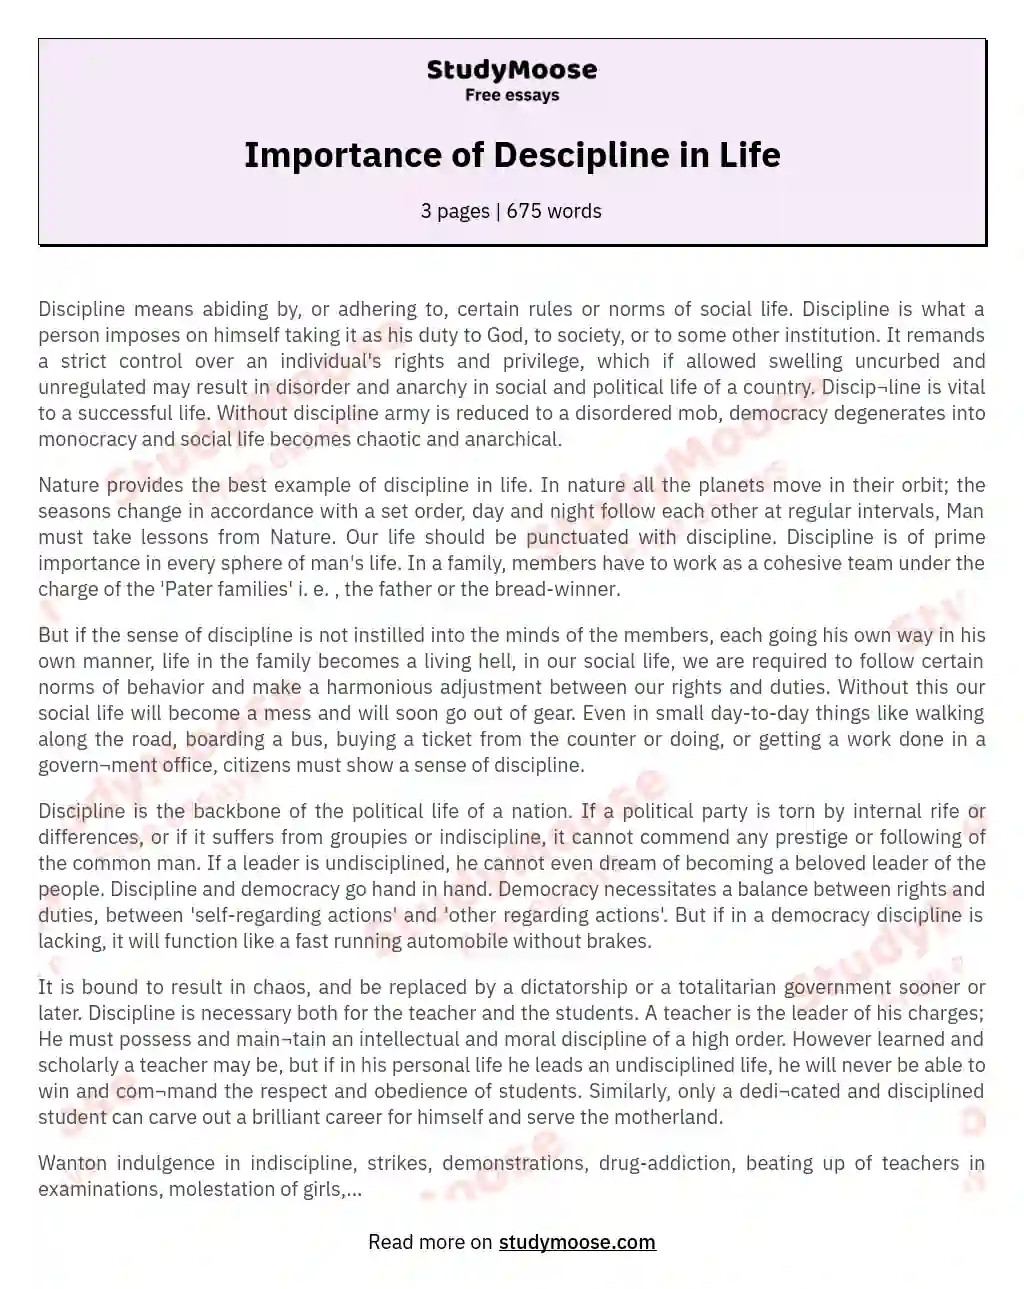 Importance of Descipline in Life